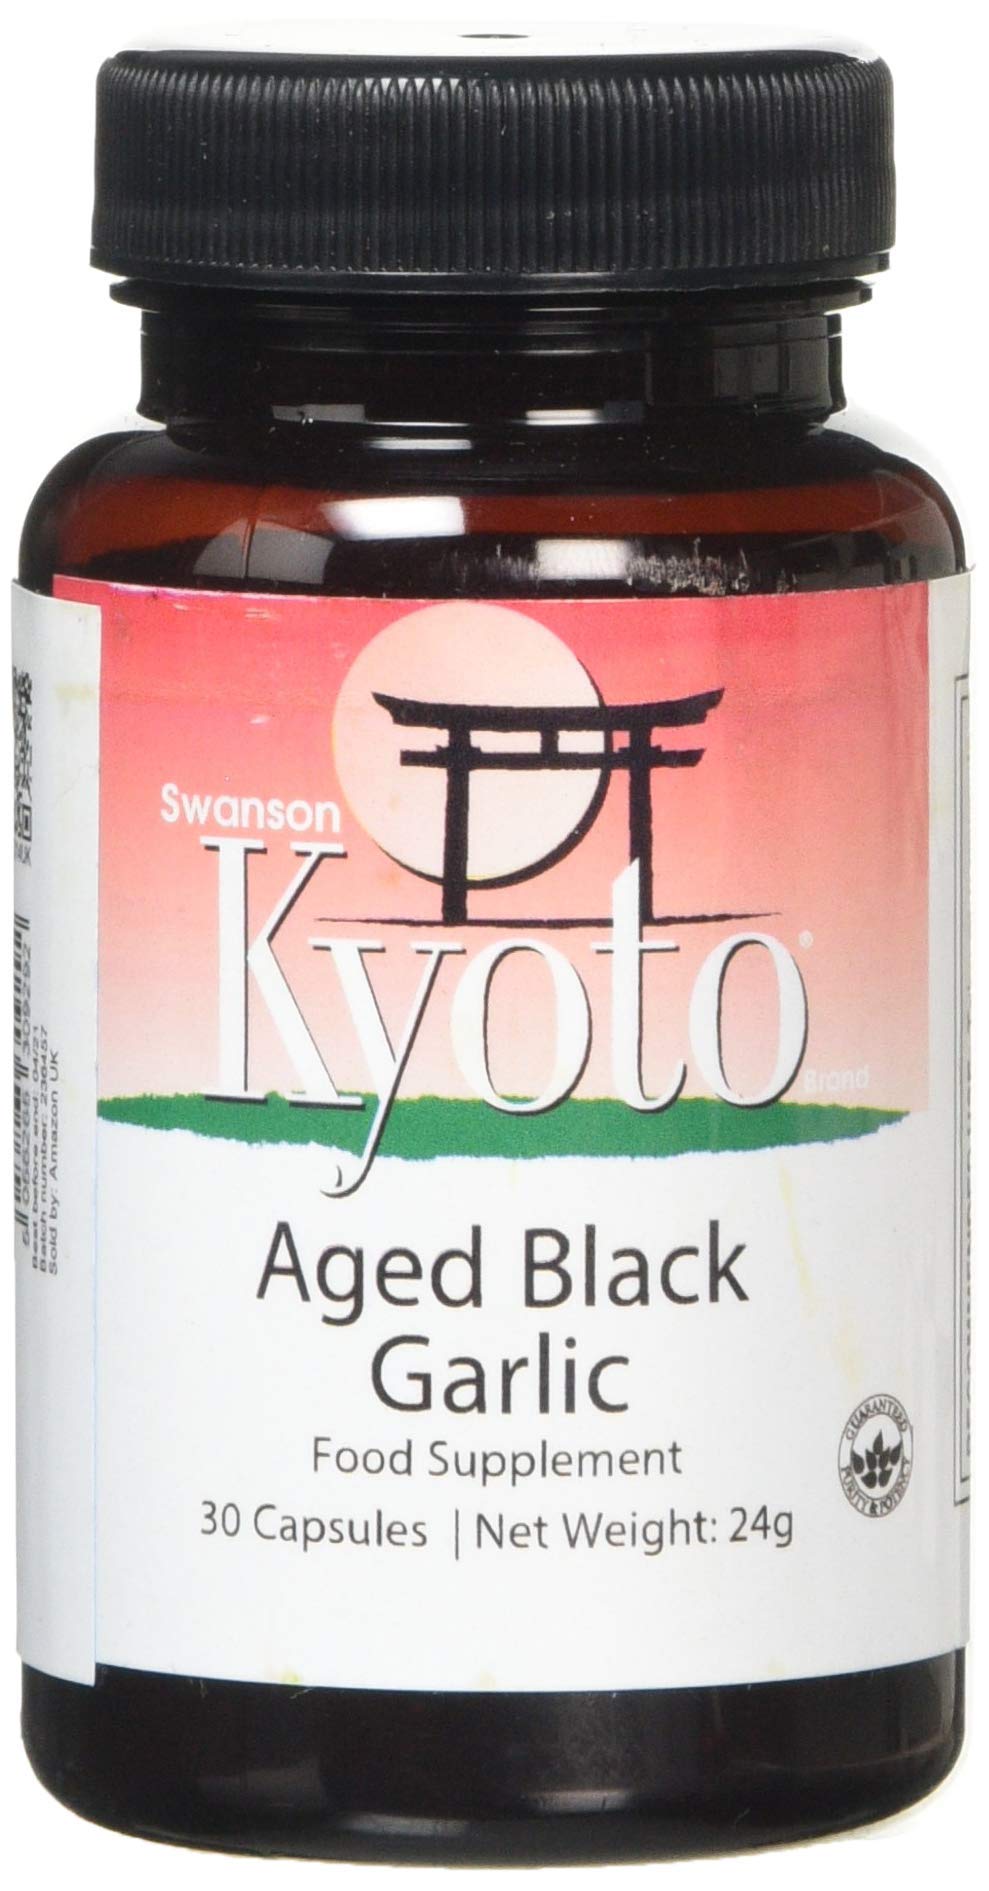 Swanson Kyoto 100% Natural Japanese Aged Black Garlic, 30 Capsules, ITEM-RE-003800:UK-Label - BeesActive Australia